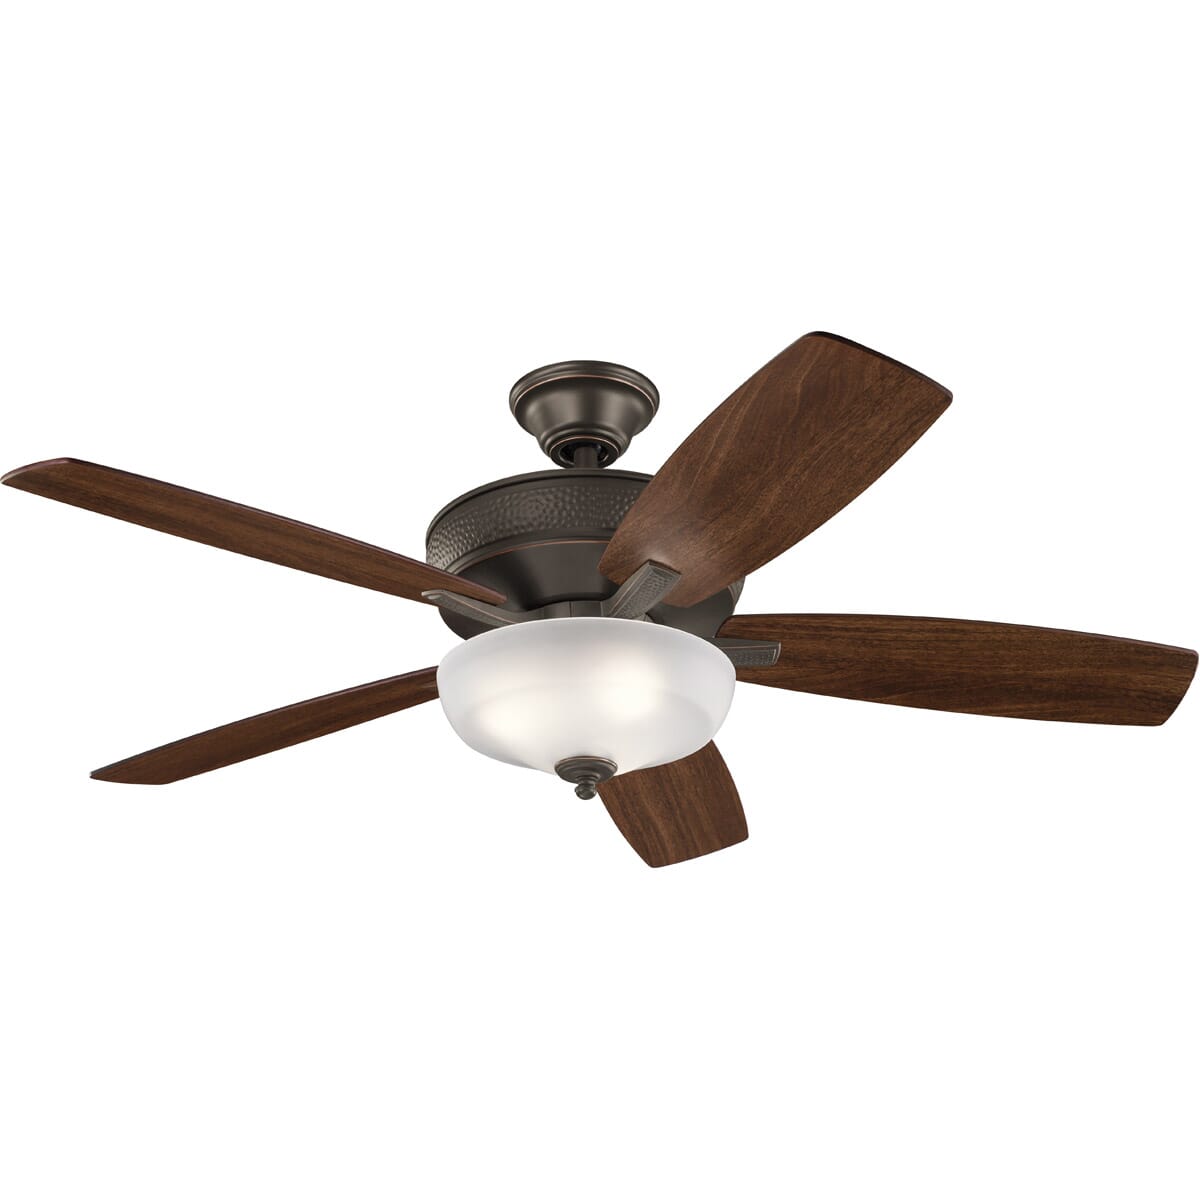 Monarch Ii Select 3-Light Indoor Ceiling Fan in Olde Bronze -  Kichler, 339413OZ